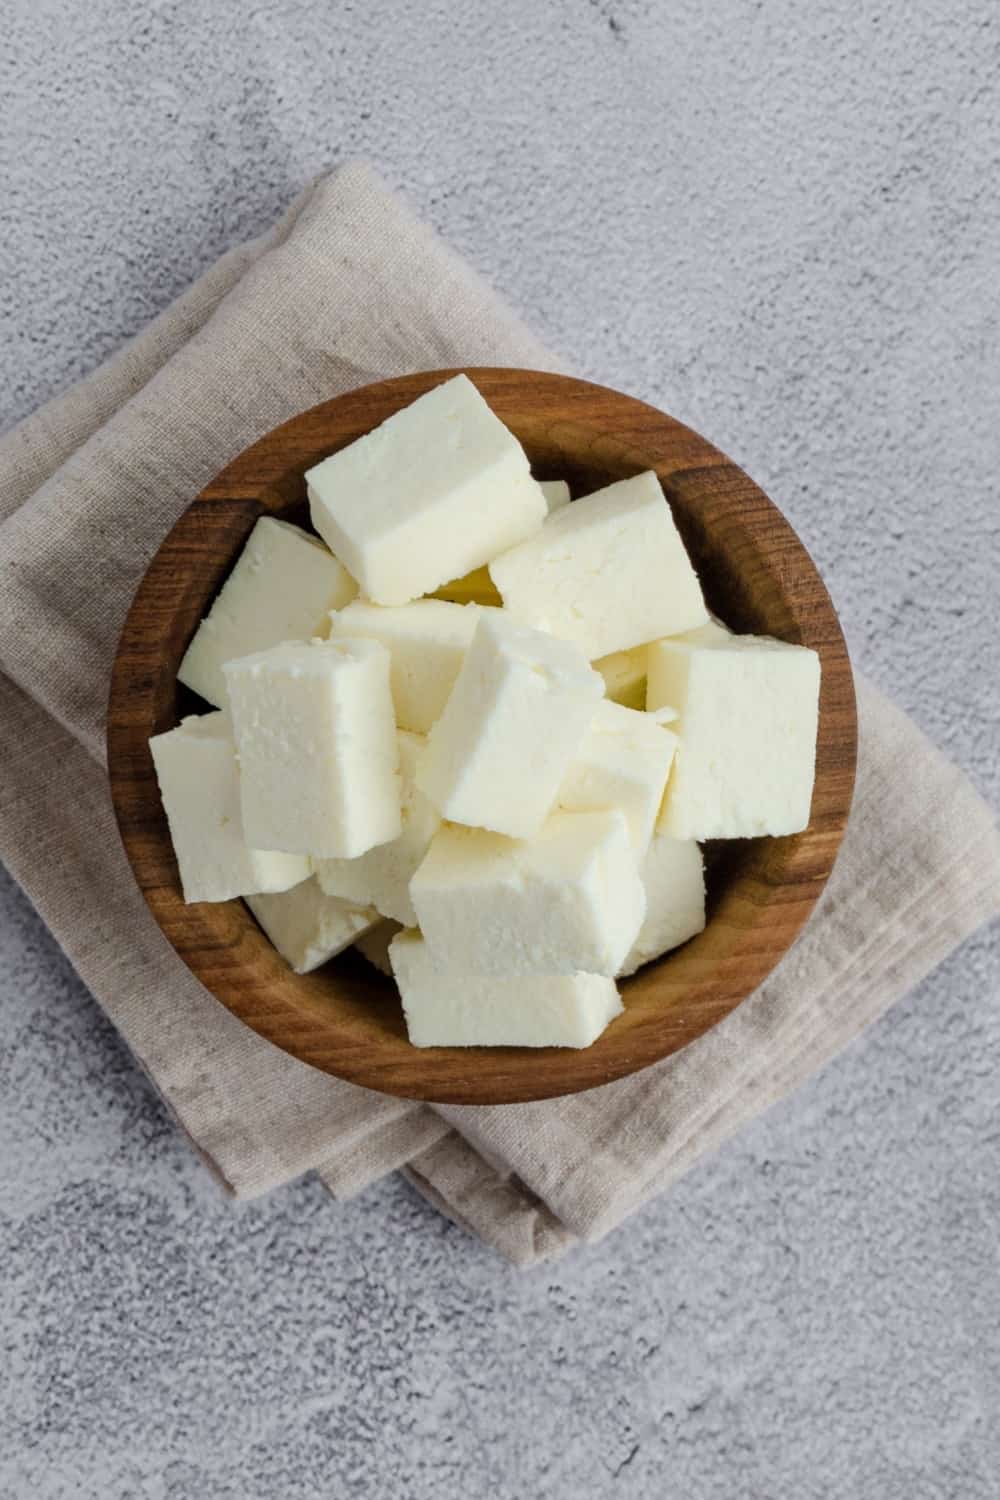 Homemade Indian paneer cheese made from fresh milk and lemon juice